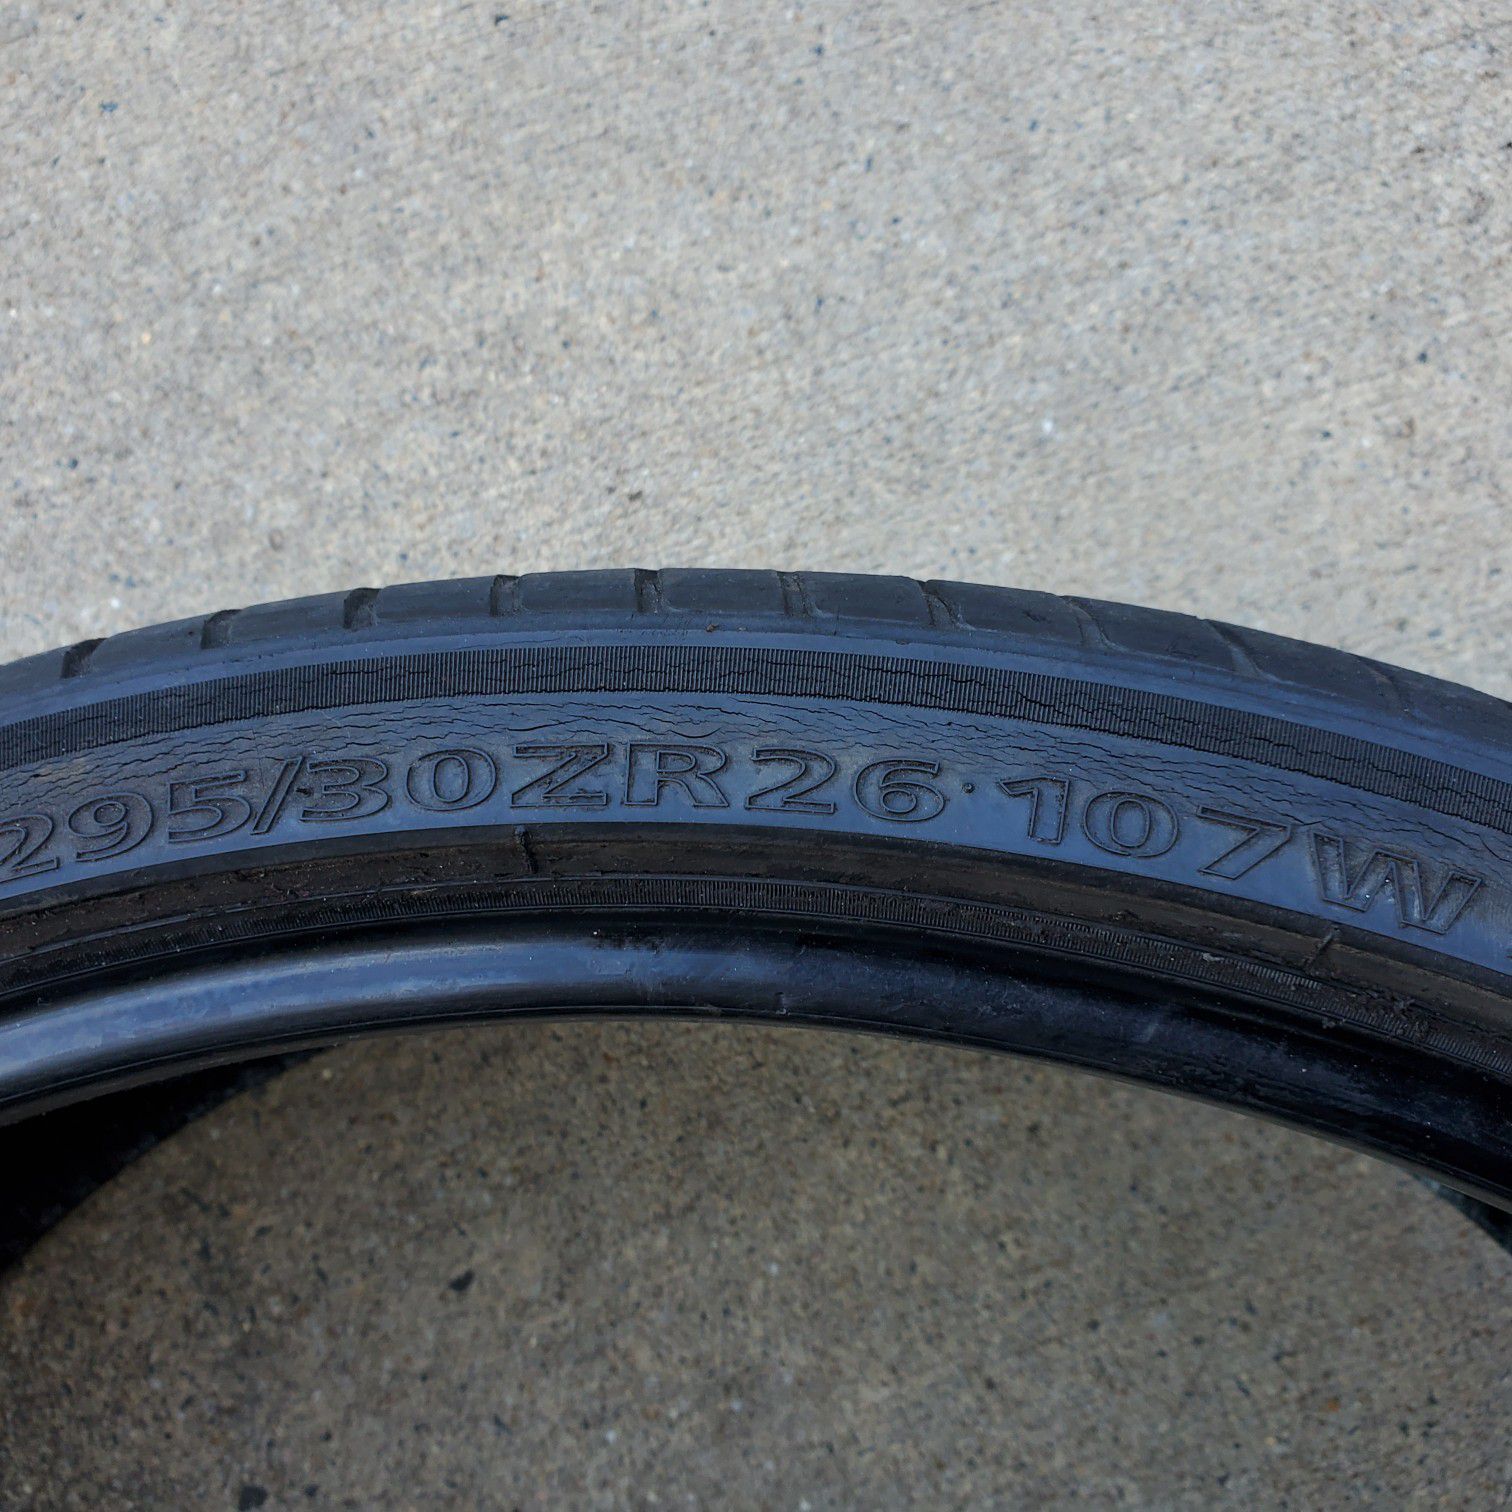 295/30/26 inch Lexani tires